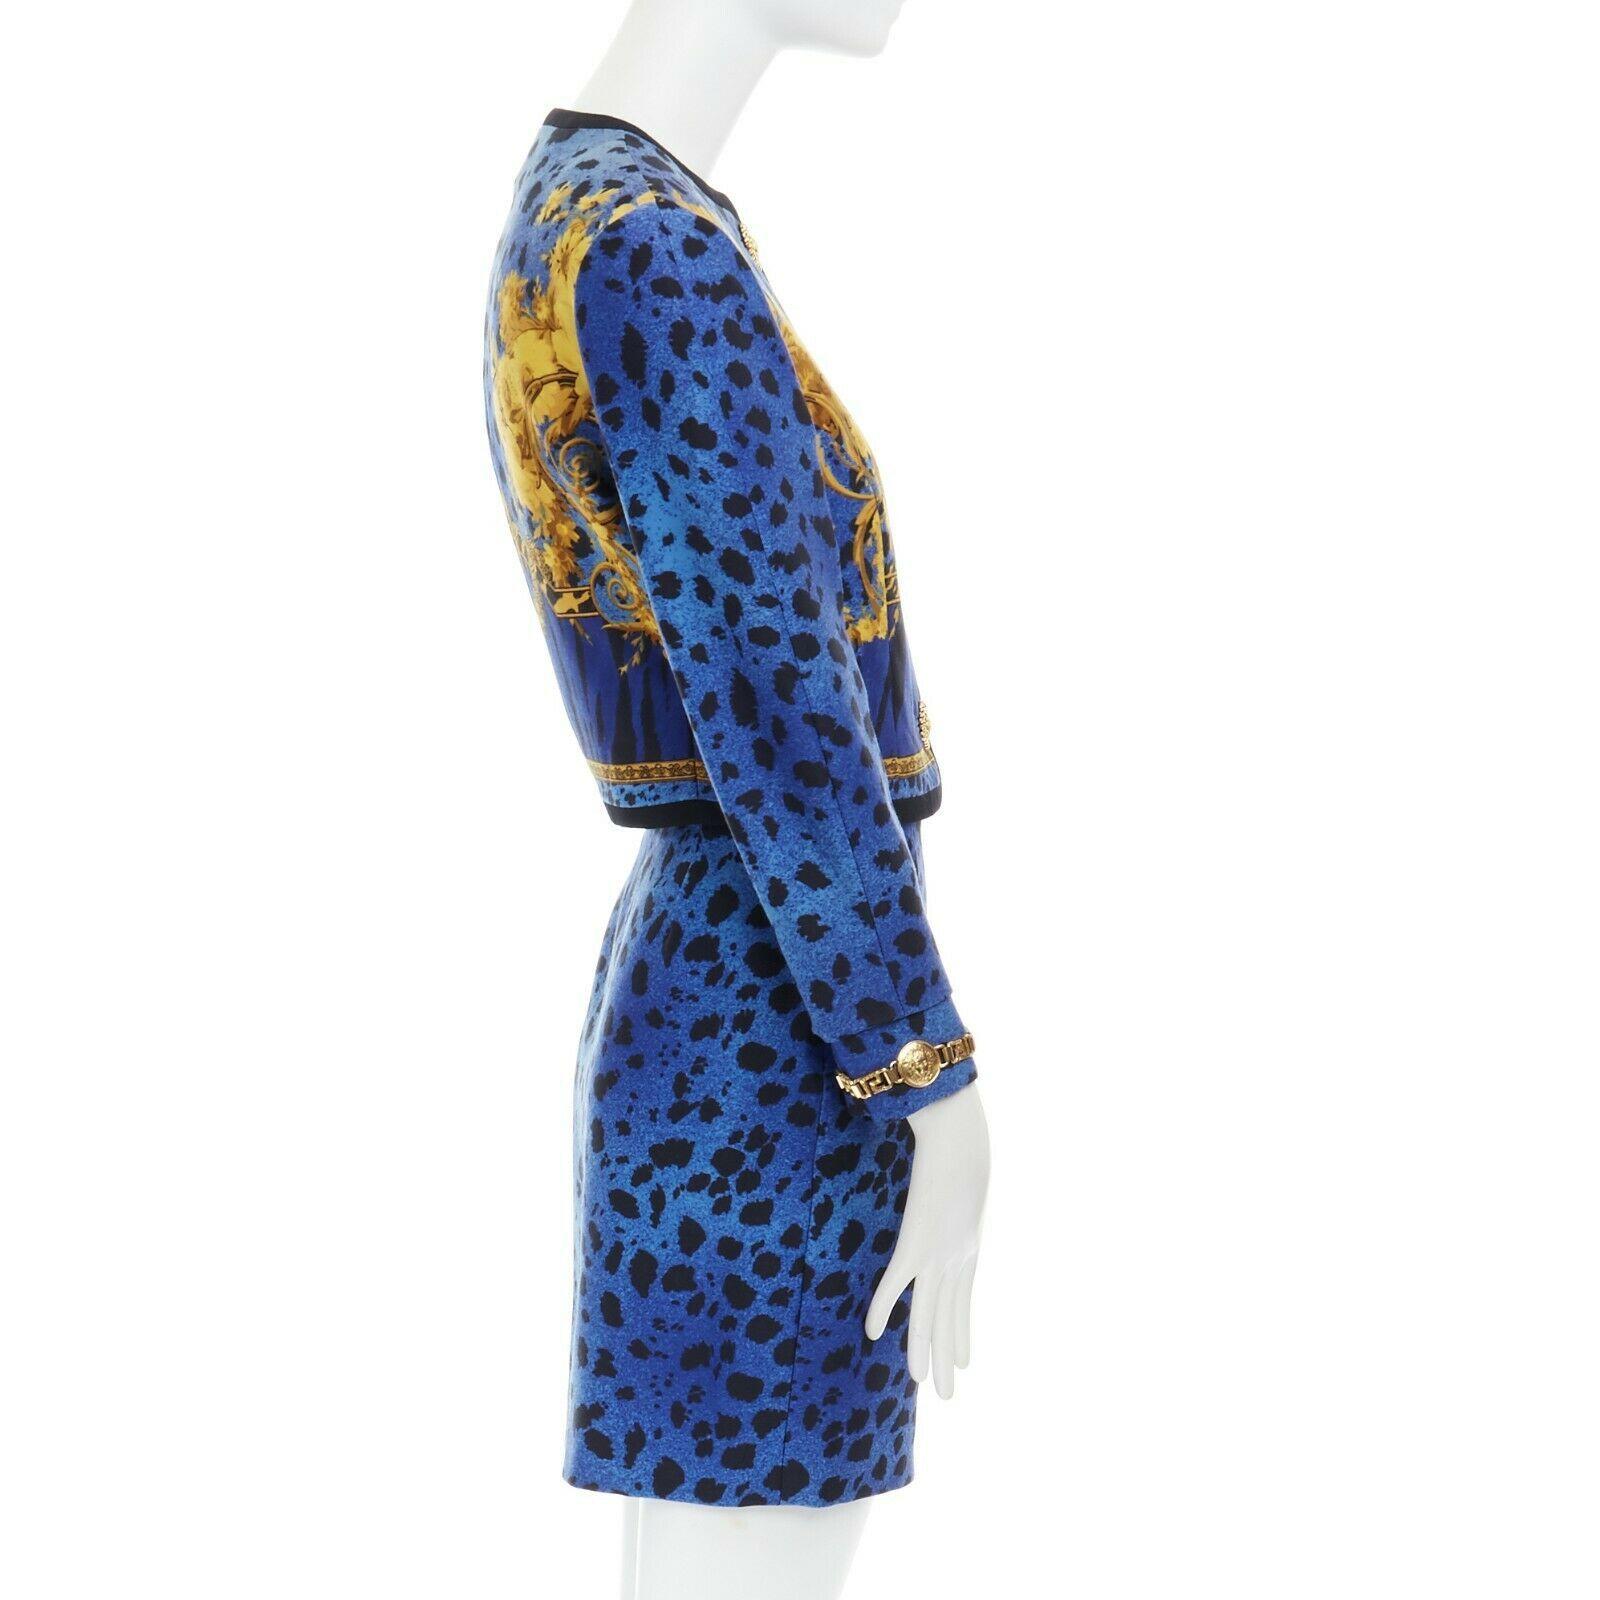 Purple GIANNI VERSACE gold baroque print blue leopard Medusa button jacket skirt set XS